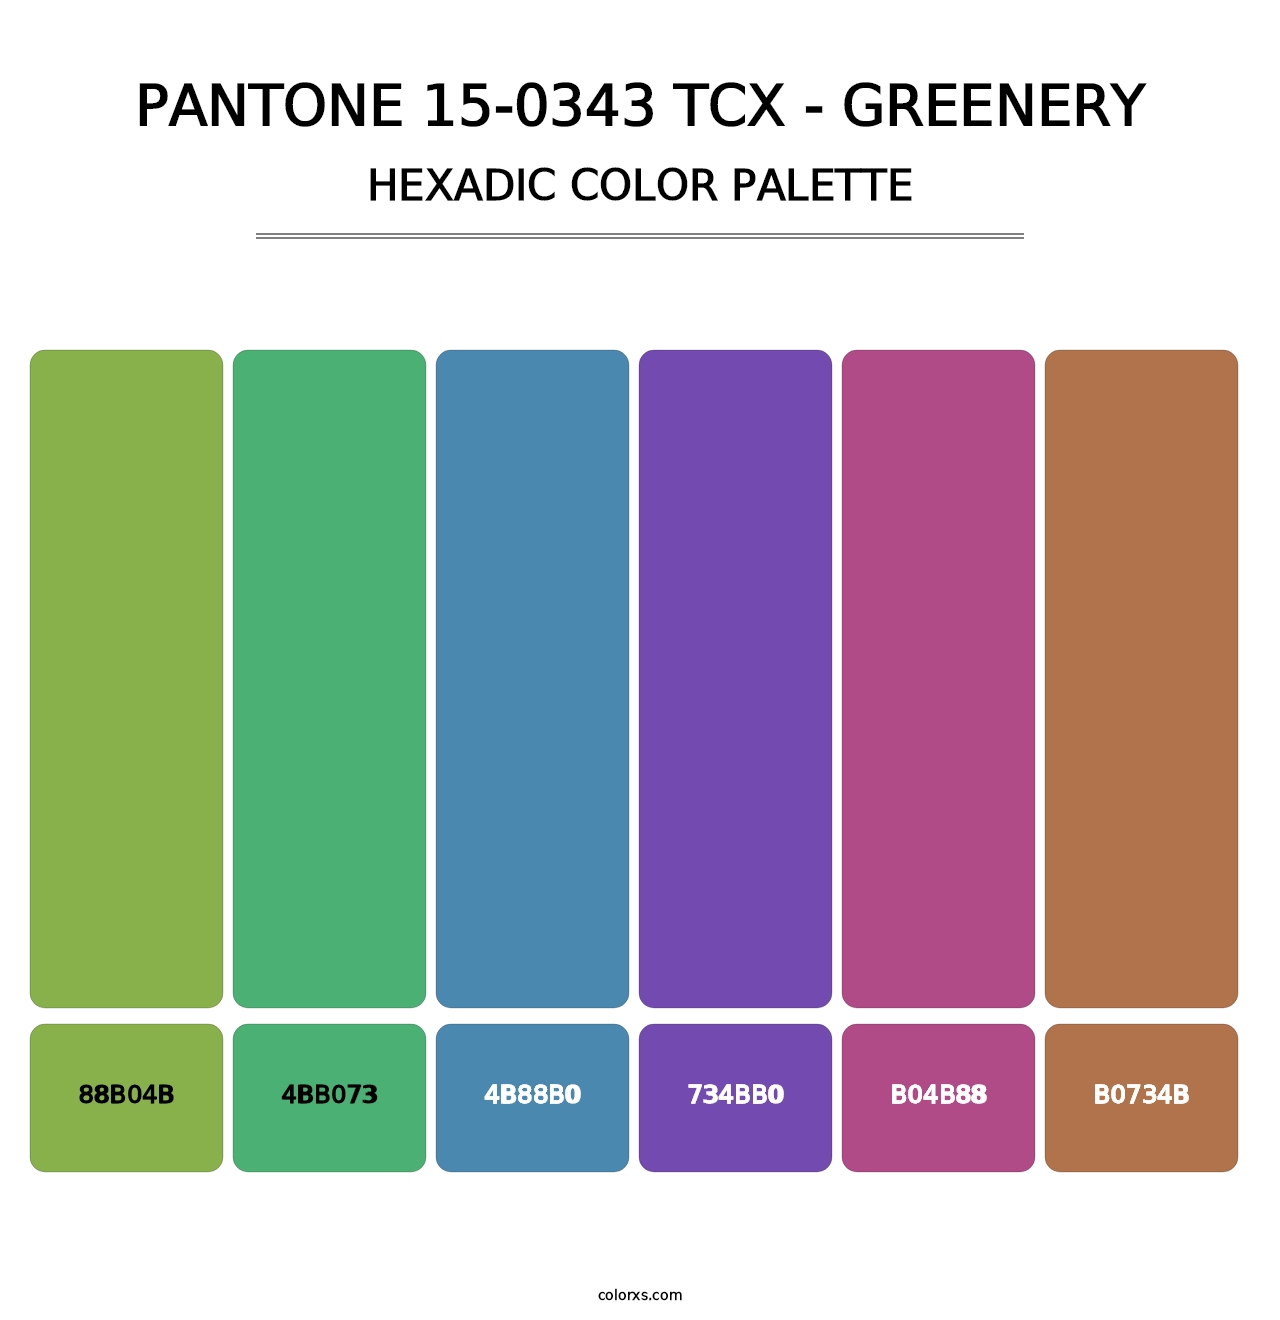 PANTONE 15-0343 TCX - Greenery - Hexadic Color Palette